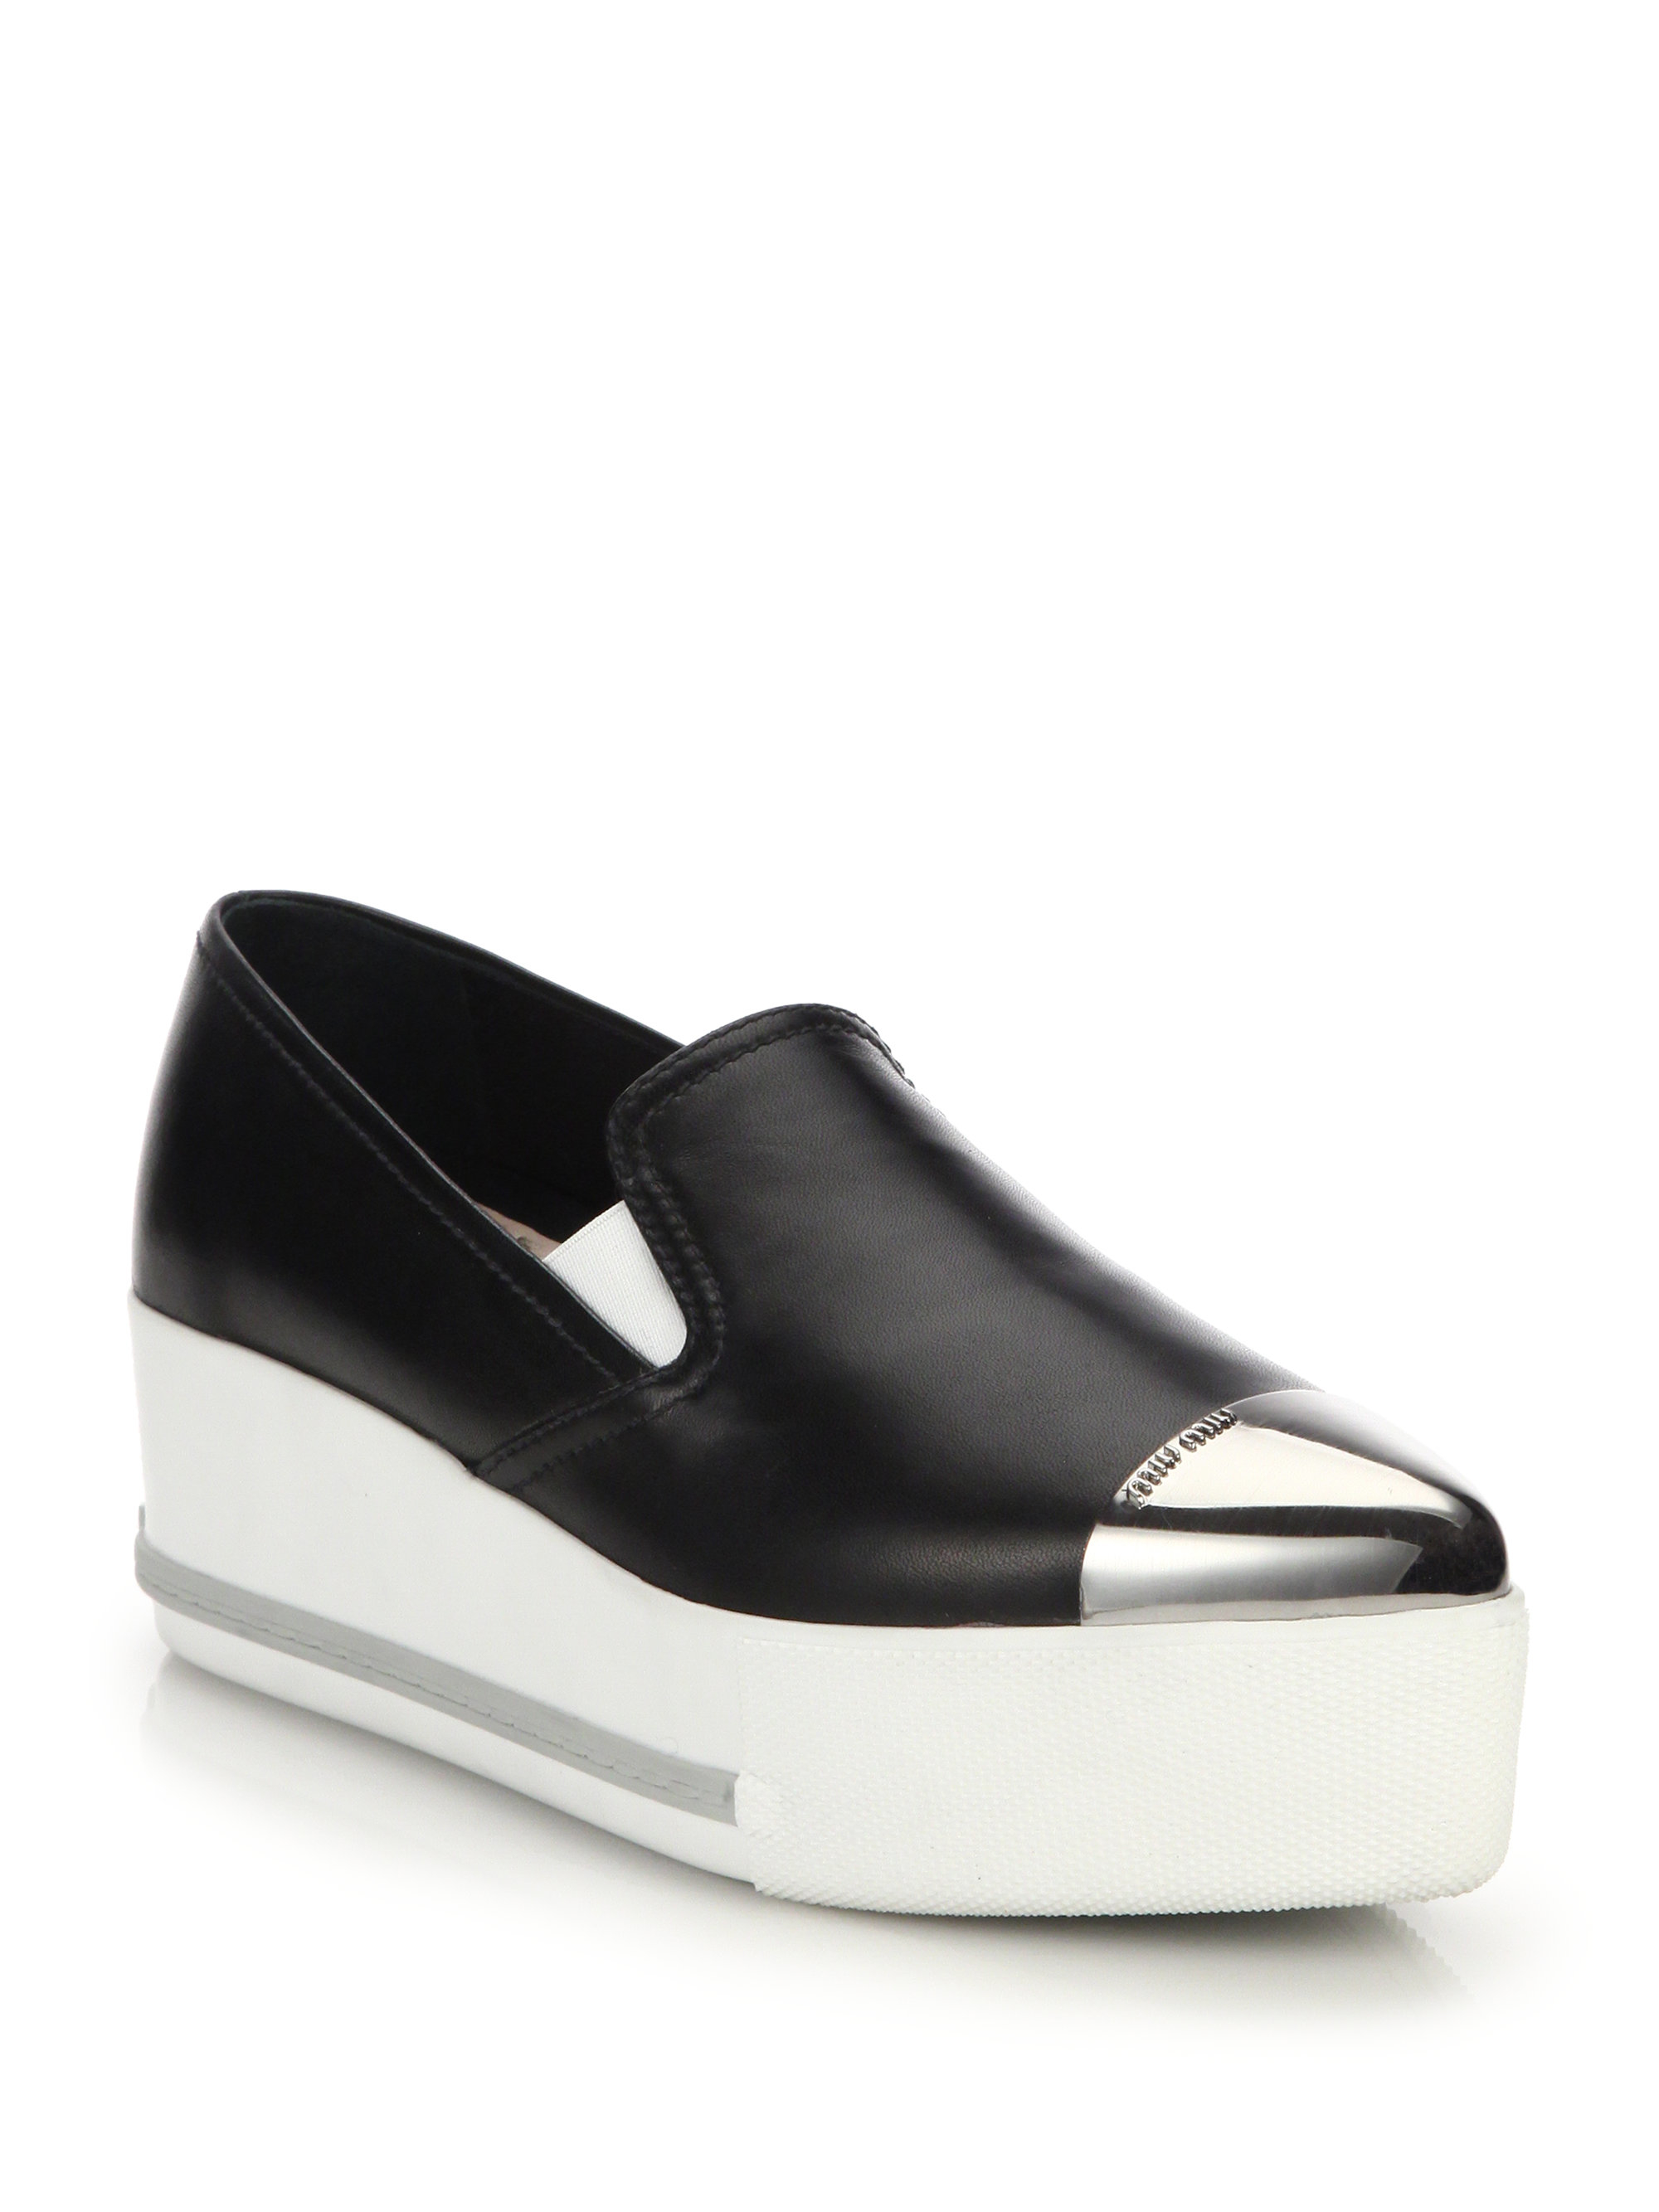 Miu miu Cap Toe Leather Platform Skate Sneakers in Black | Lyst